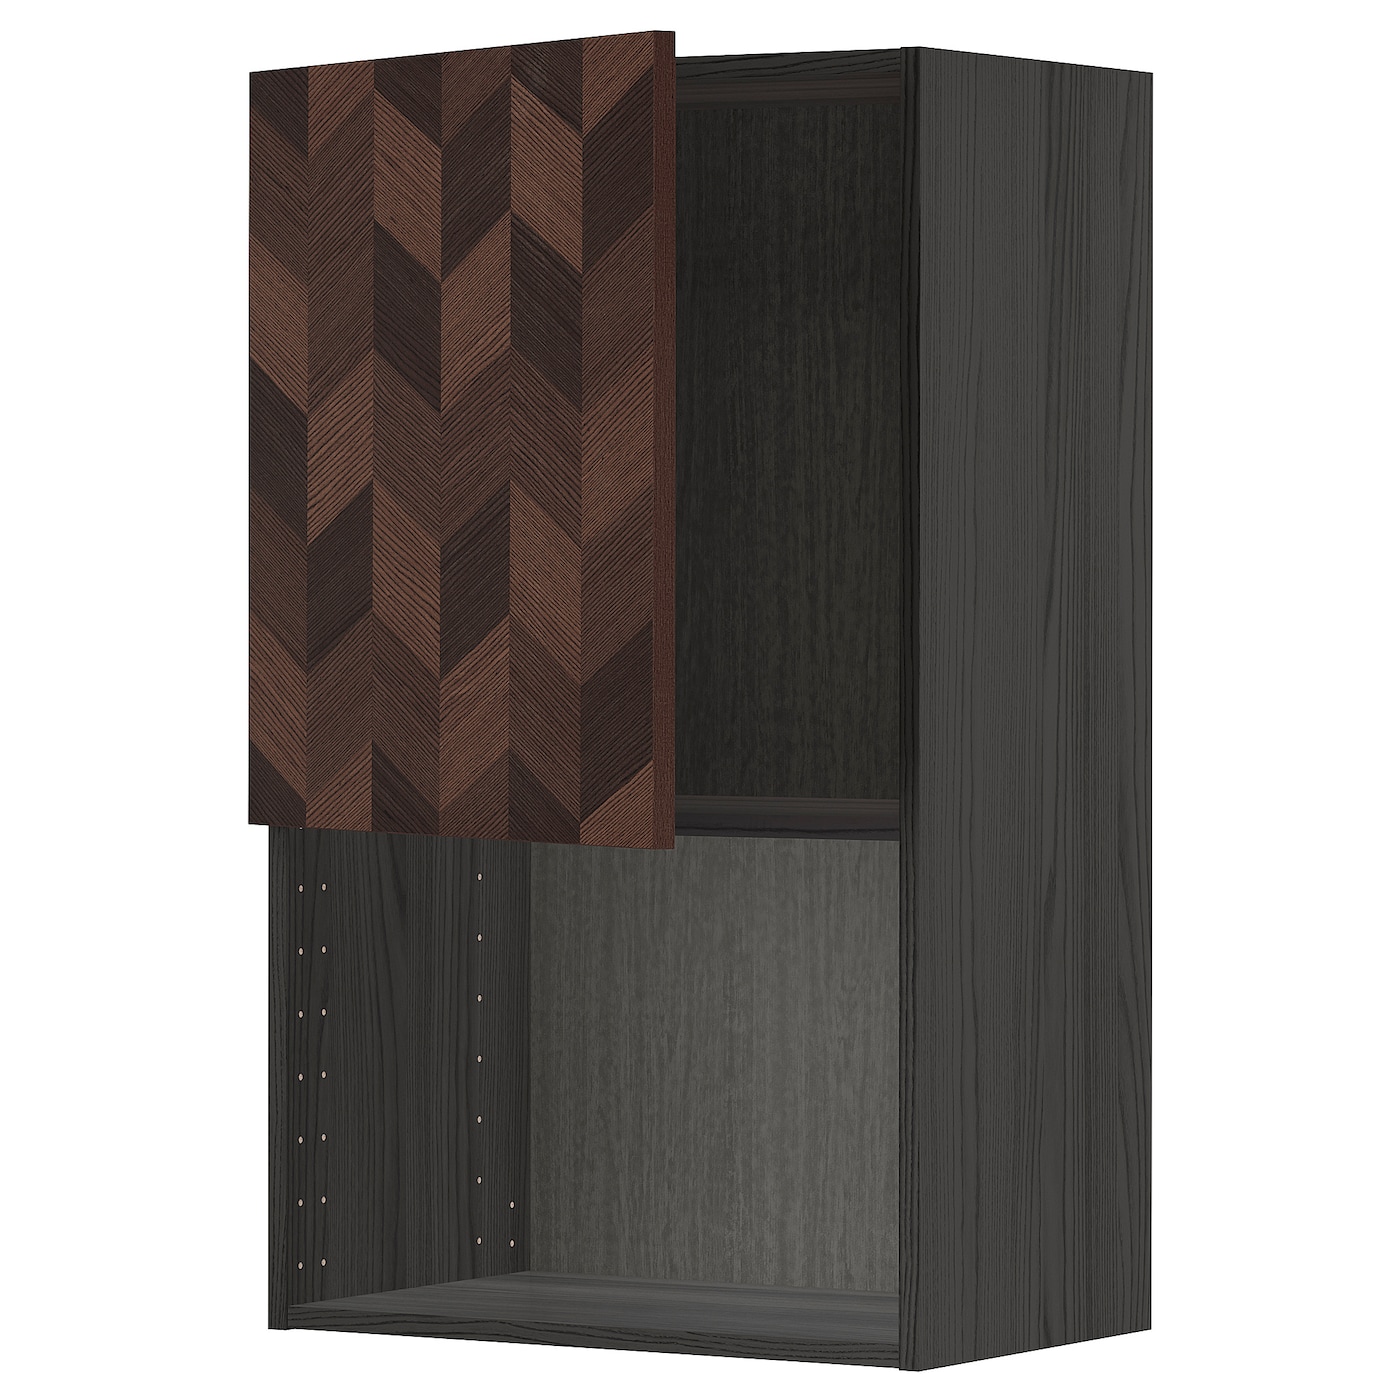 METOD Навесной шкаф - METOD IKEA/ МЕТОД ИКЕА, 100х60 см, черный/коричневый